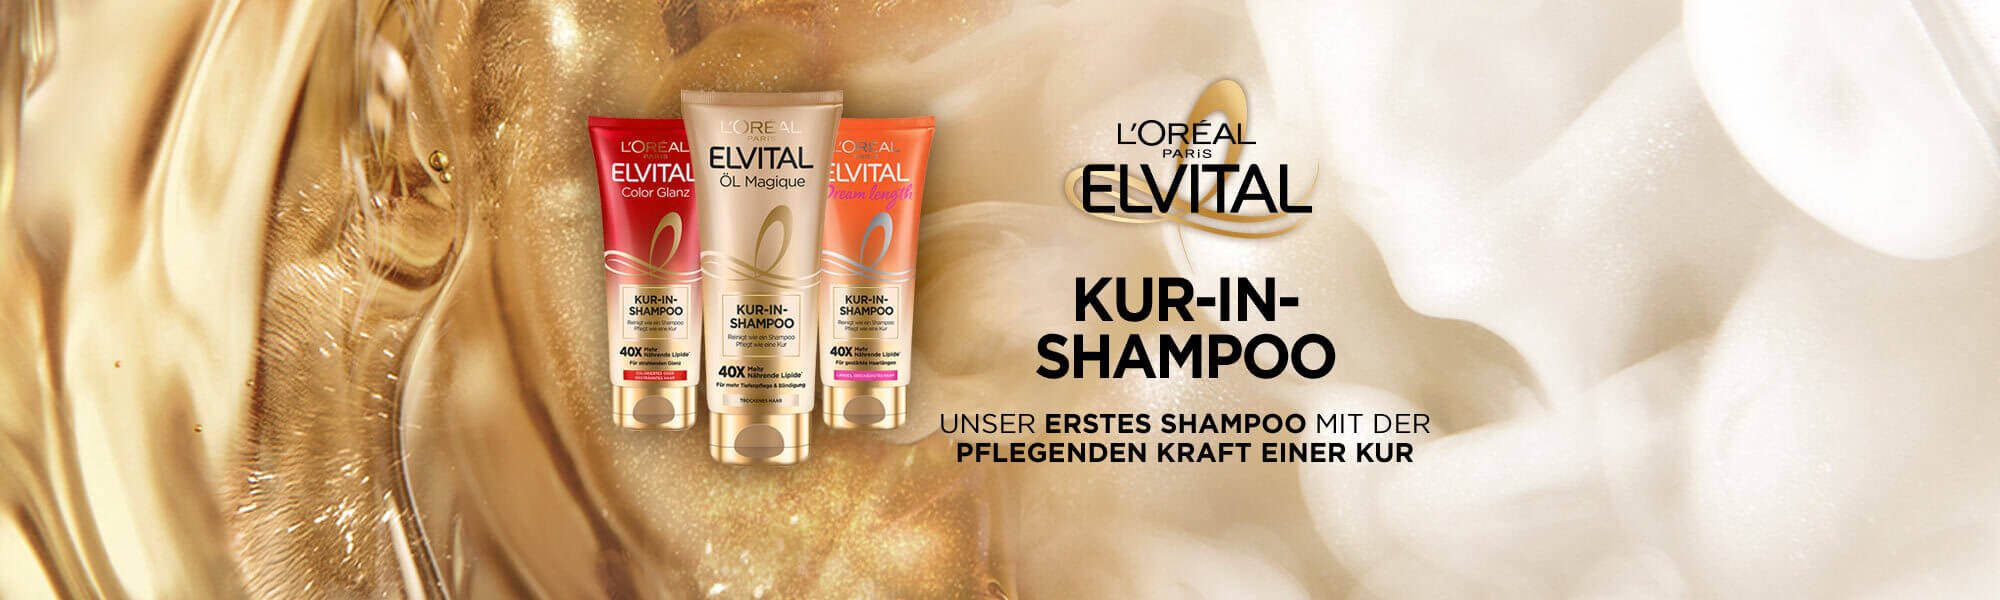 Elvital Kur In Shampoo Produktlinie